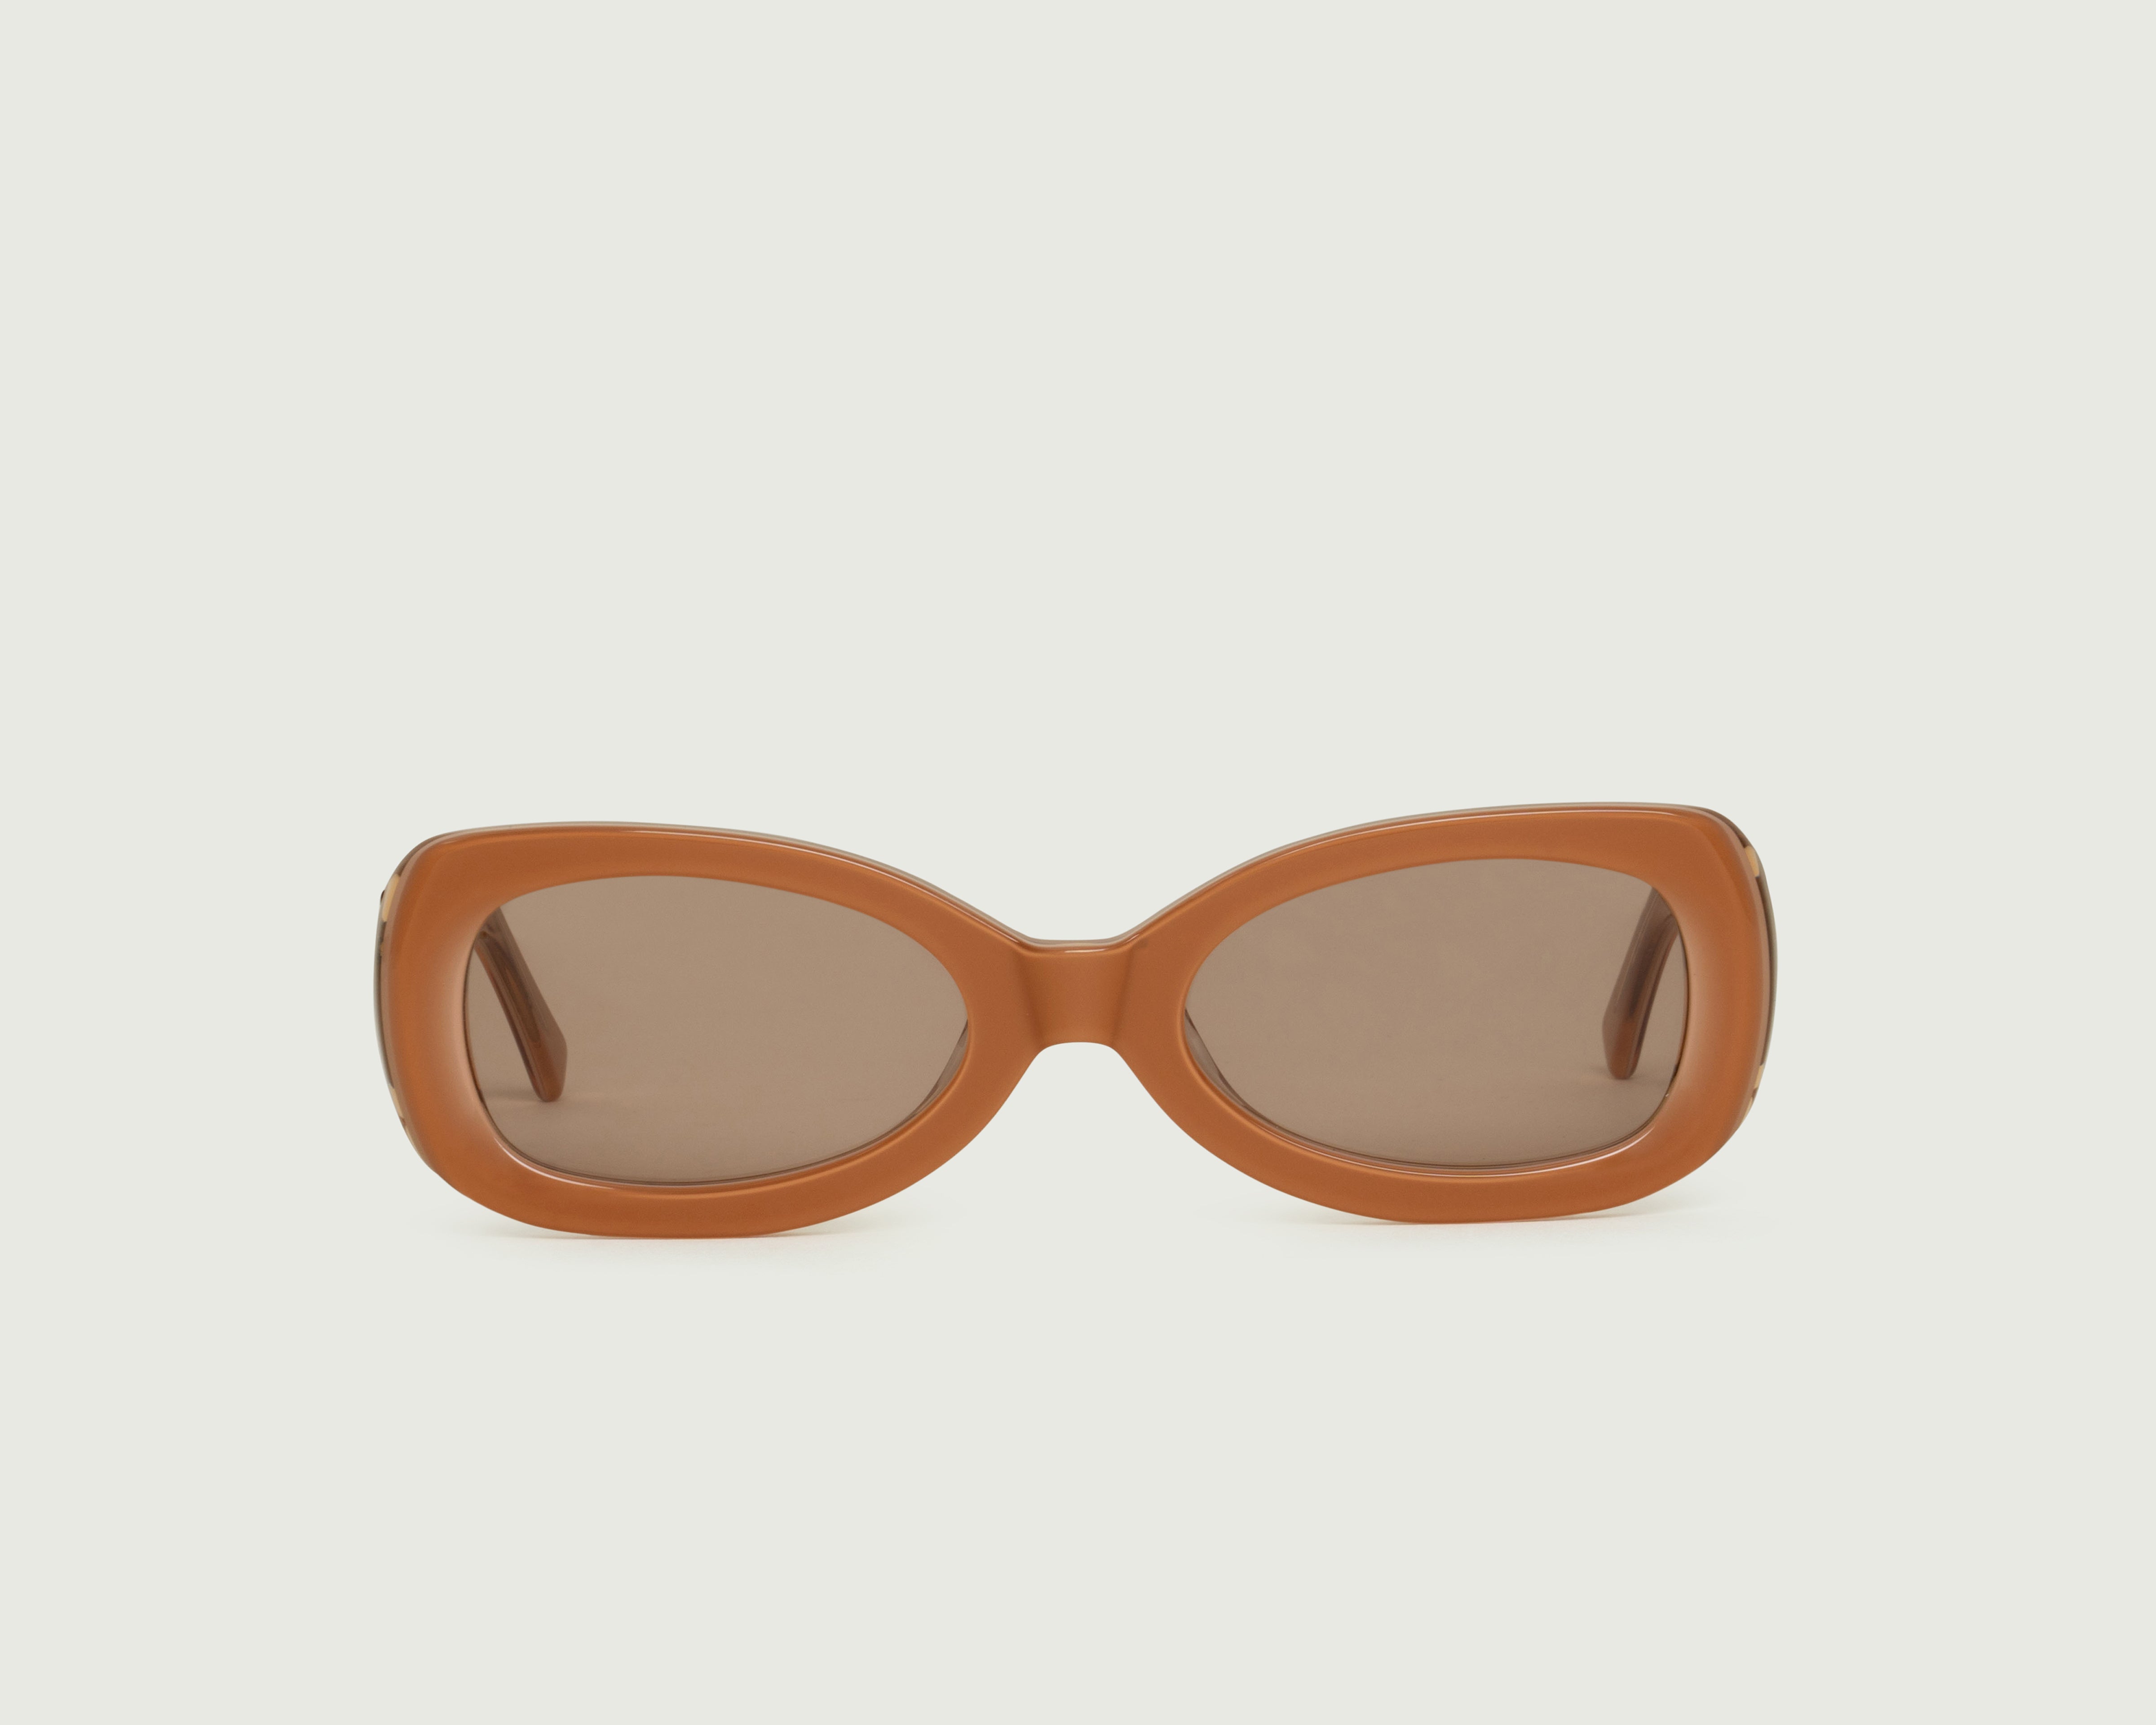 Suede::Reese Sunglasses rectangle orange acetate front